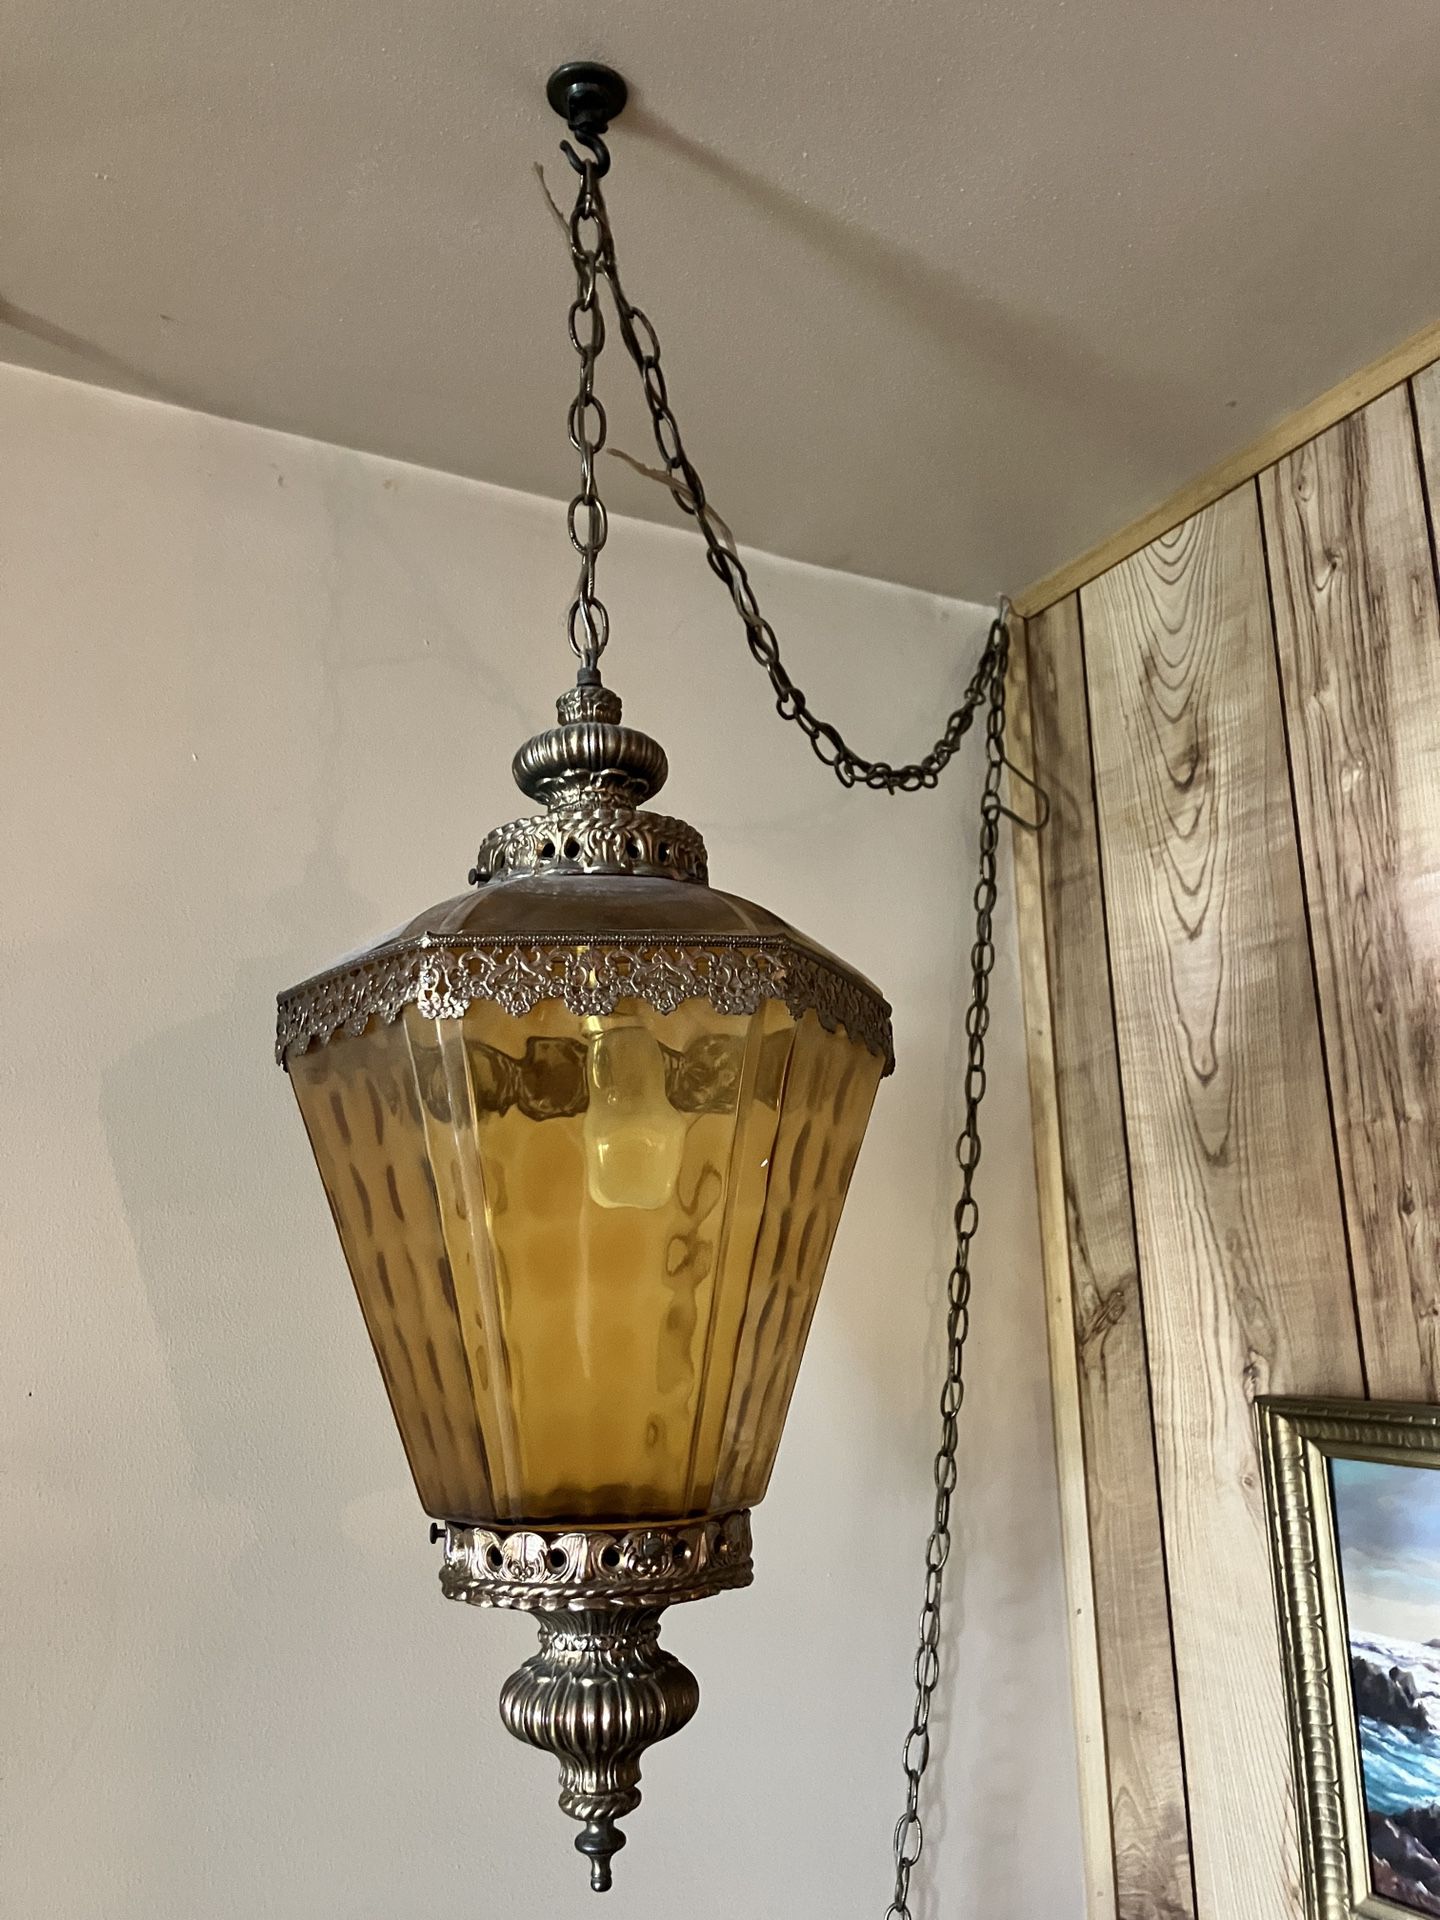 Antique Vintage Rare 60’s Amber Glass Hanging Lamp Light